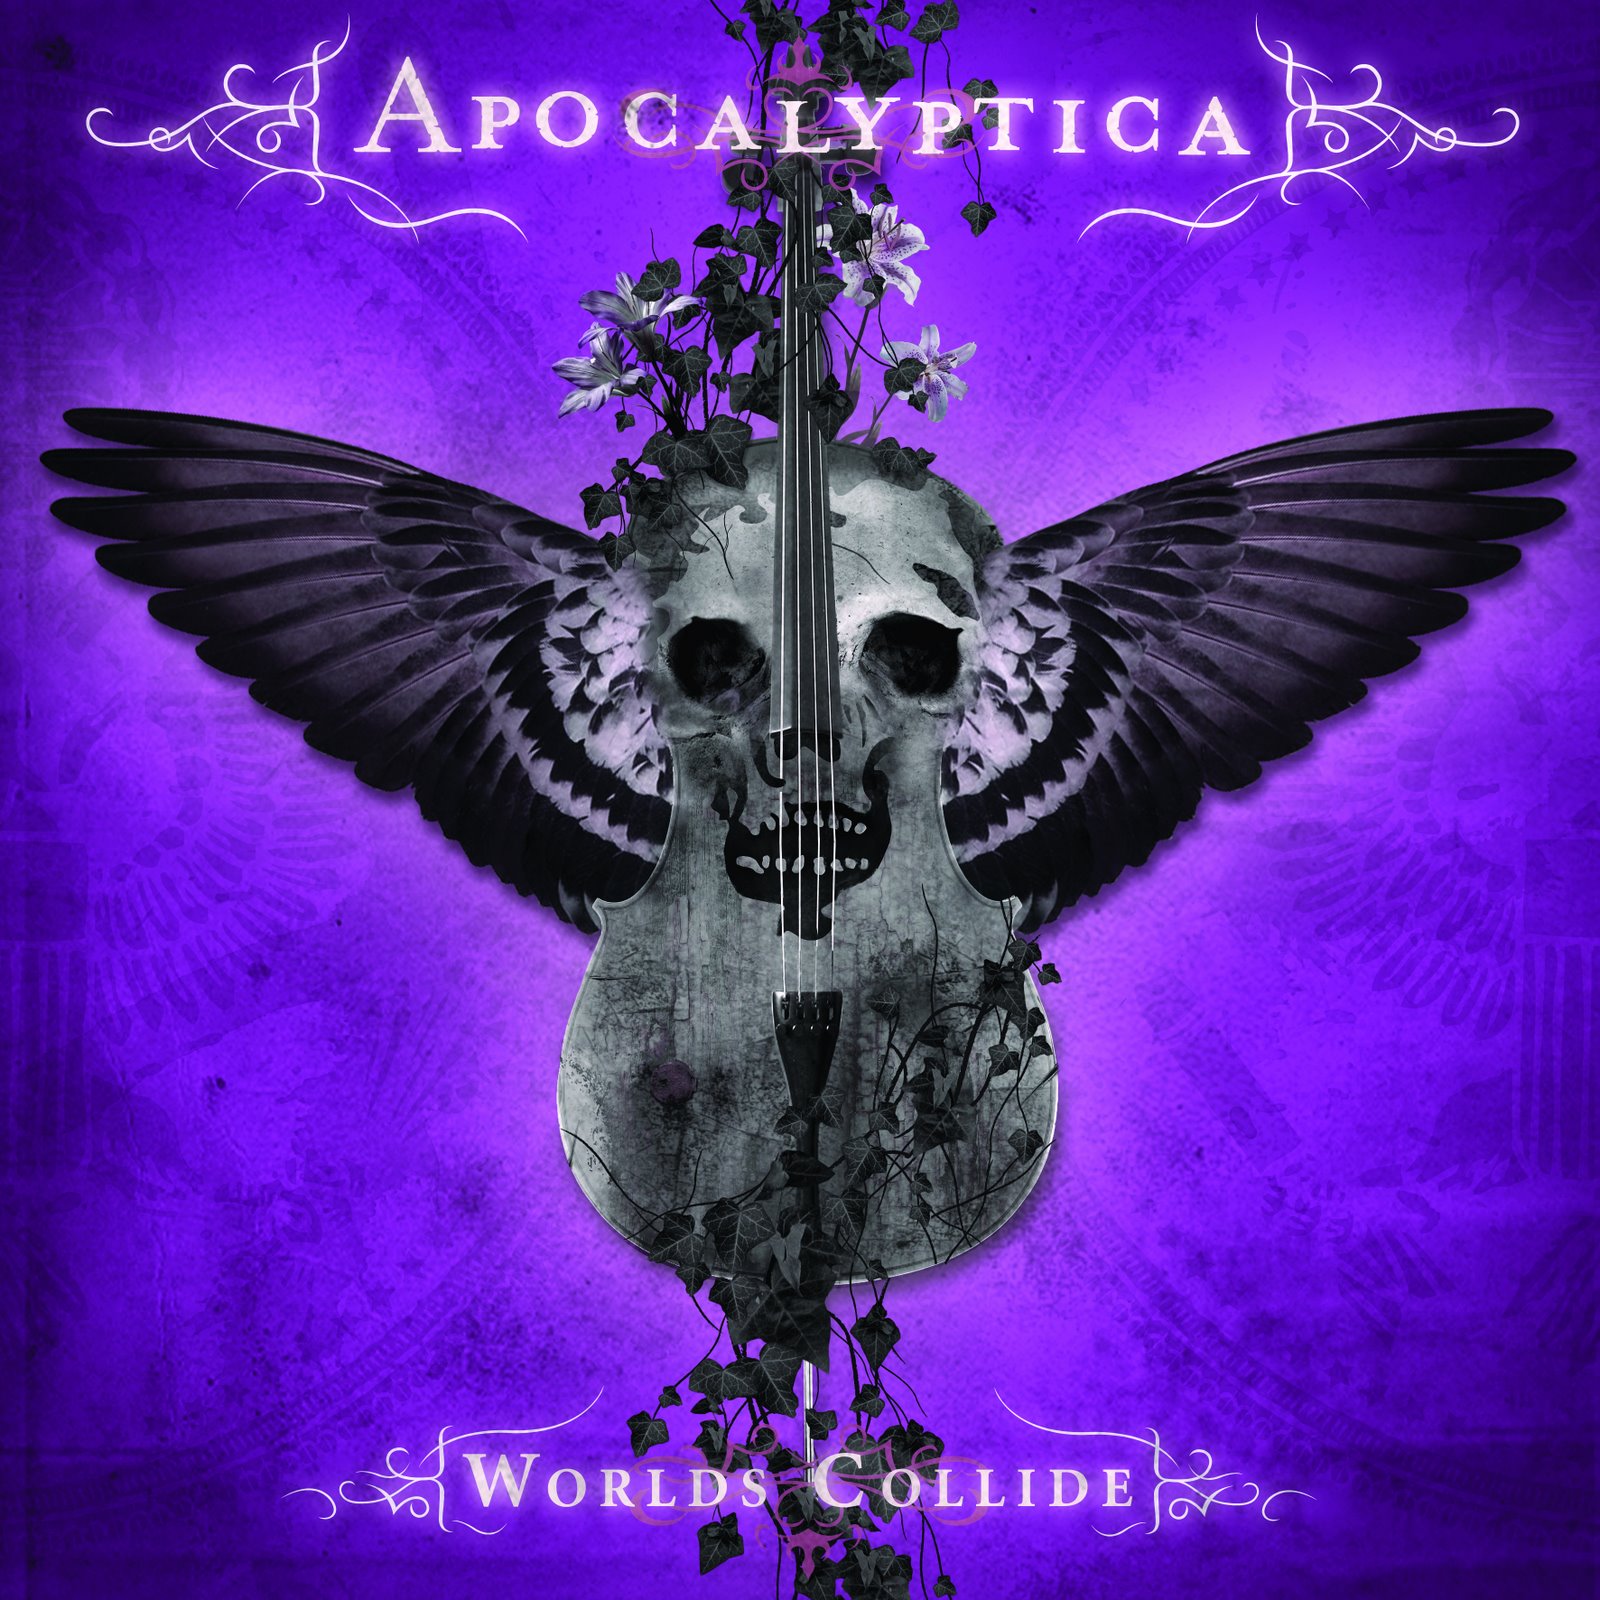 [apocalyptica-worlds.collide-front.jpg]